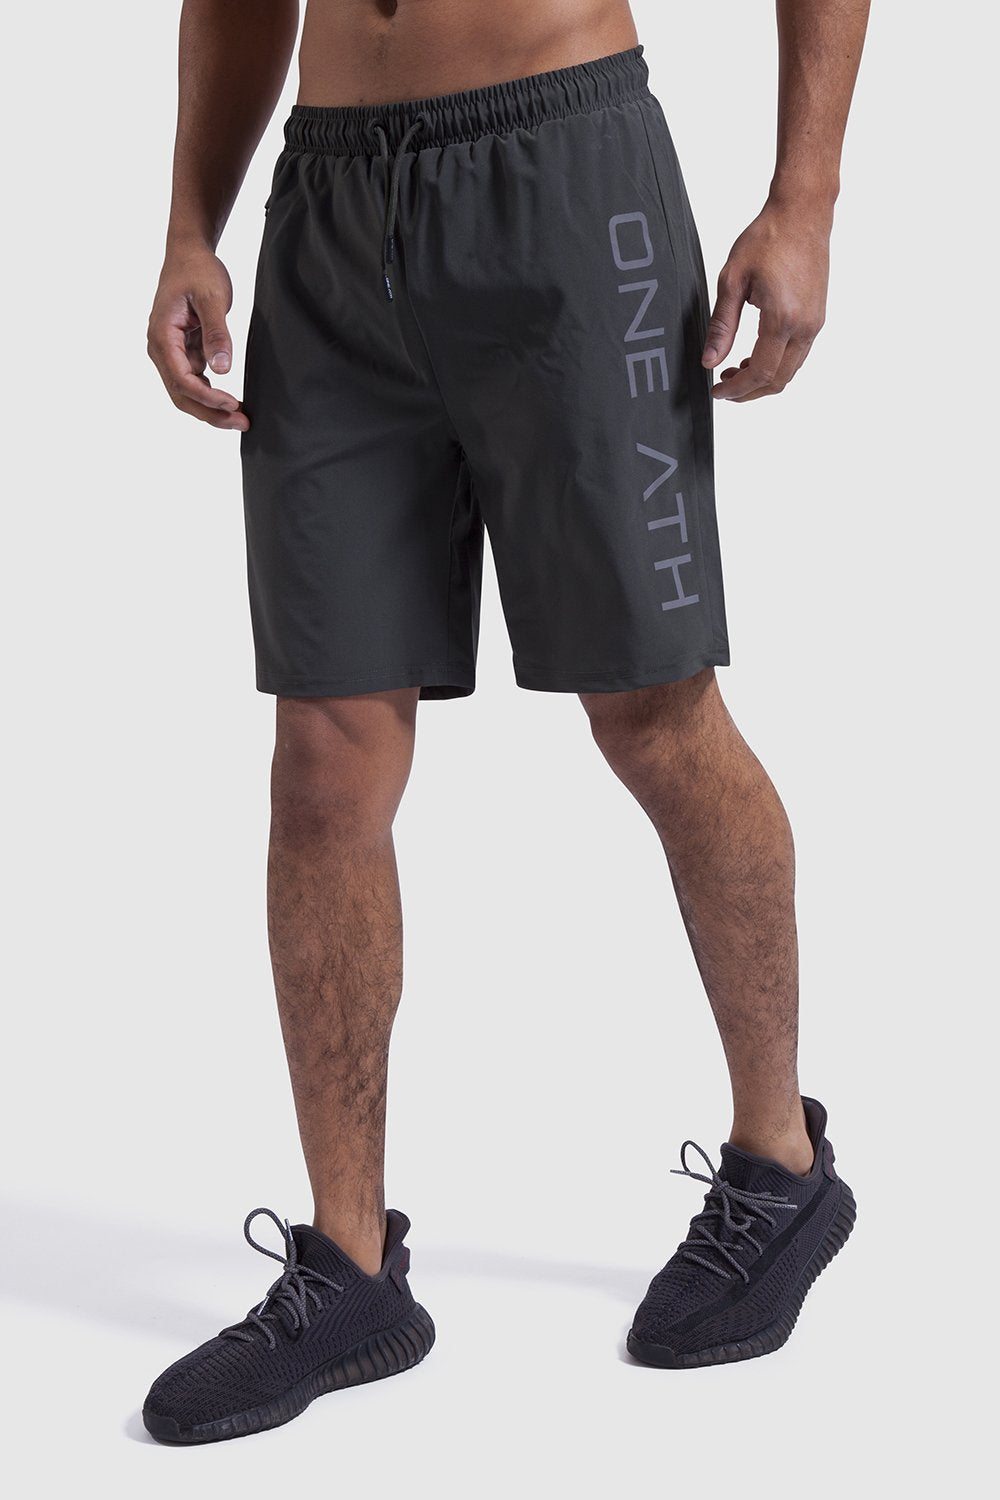 mens training shorts in khaki